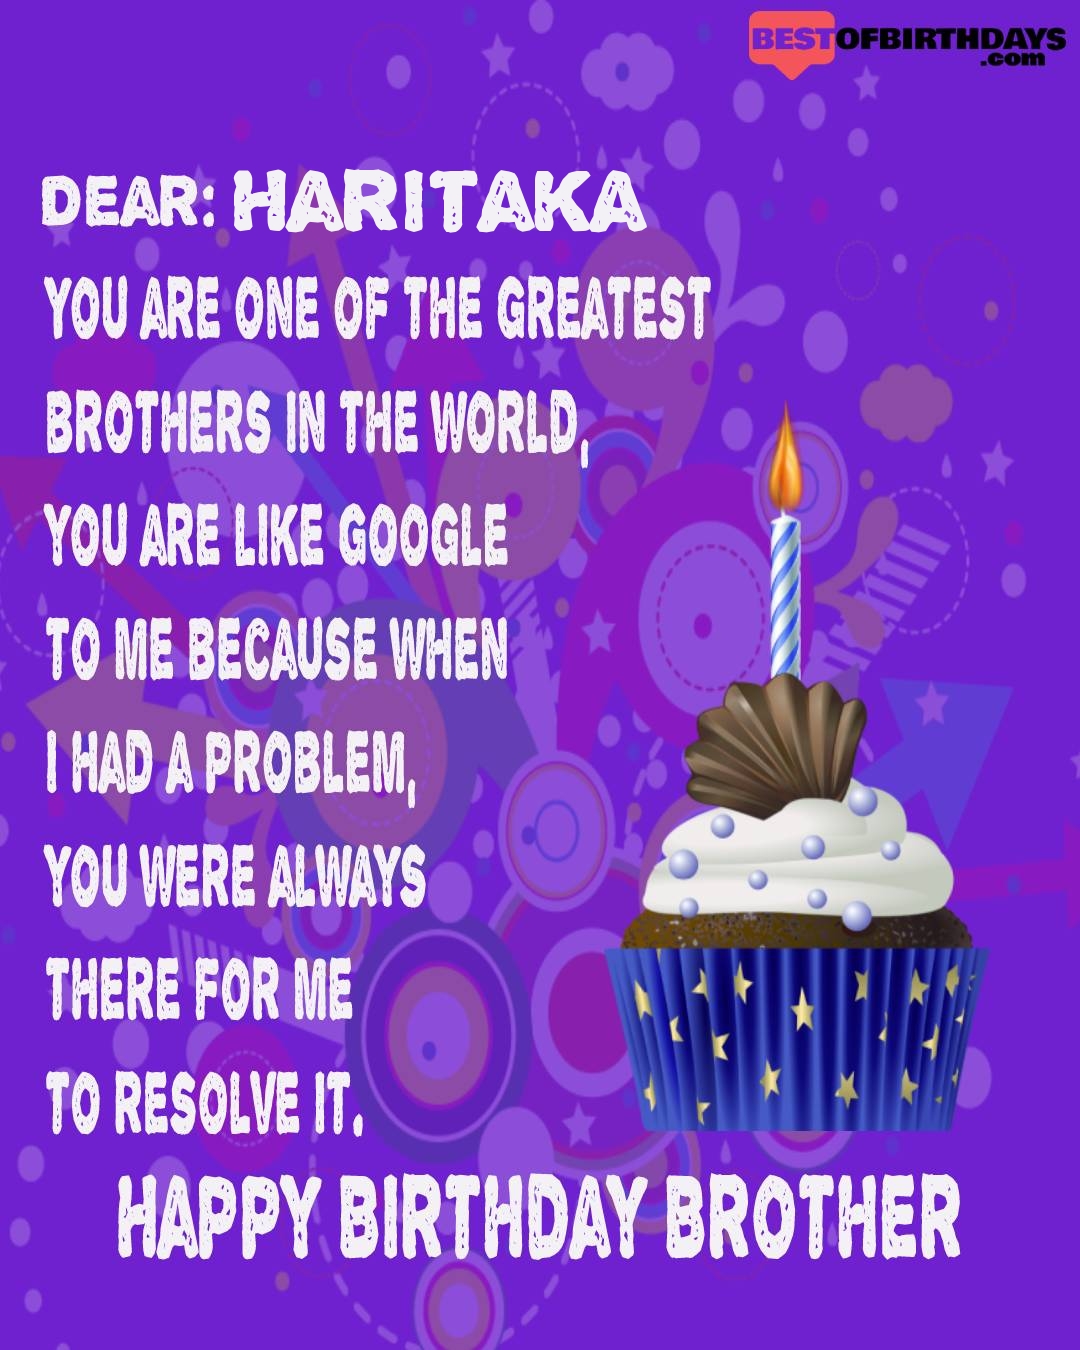 Happy birthday haritaka bhai brother bro